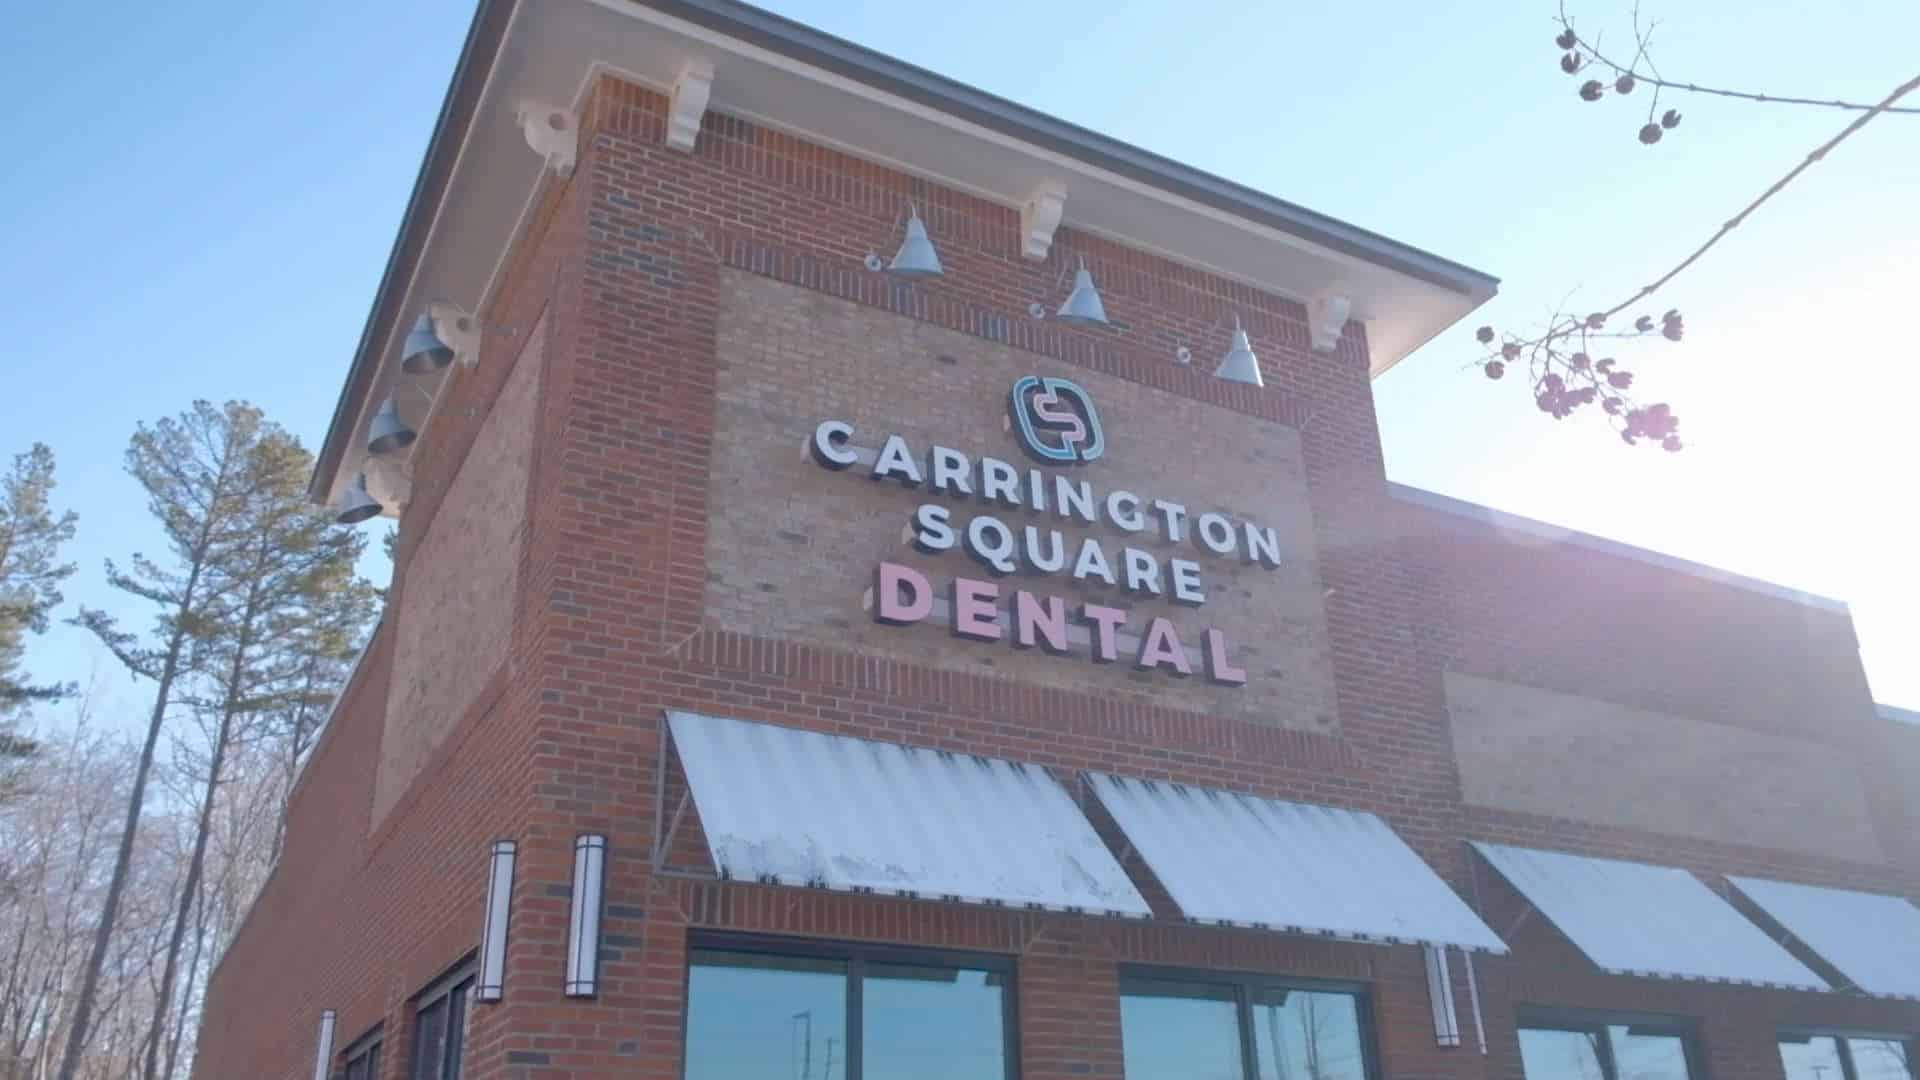 Carrington Square Dental building.